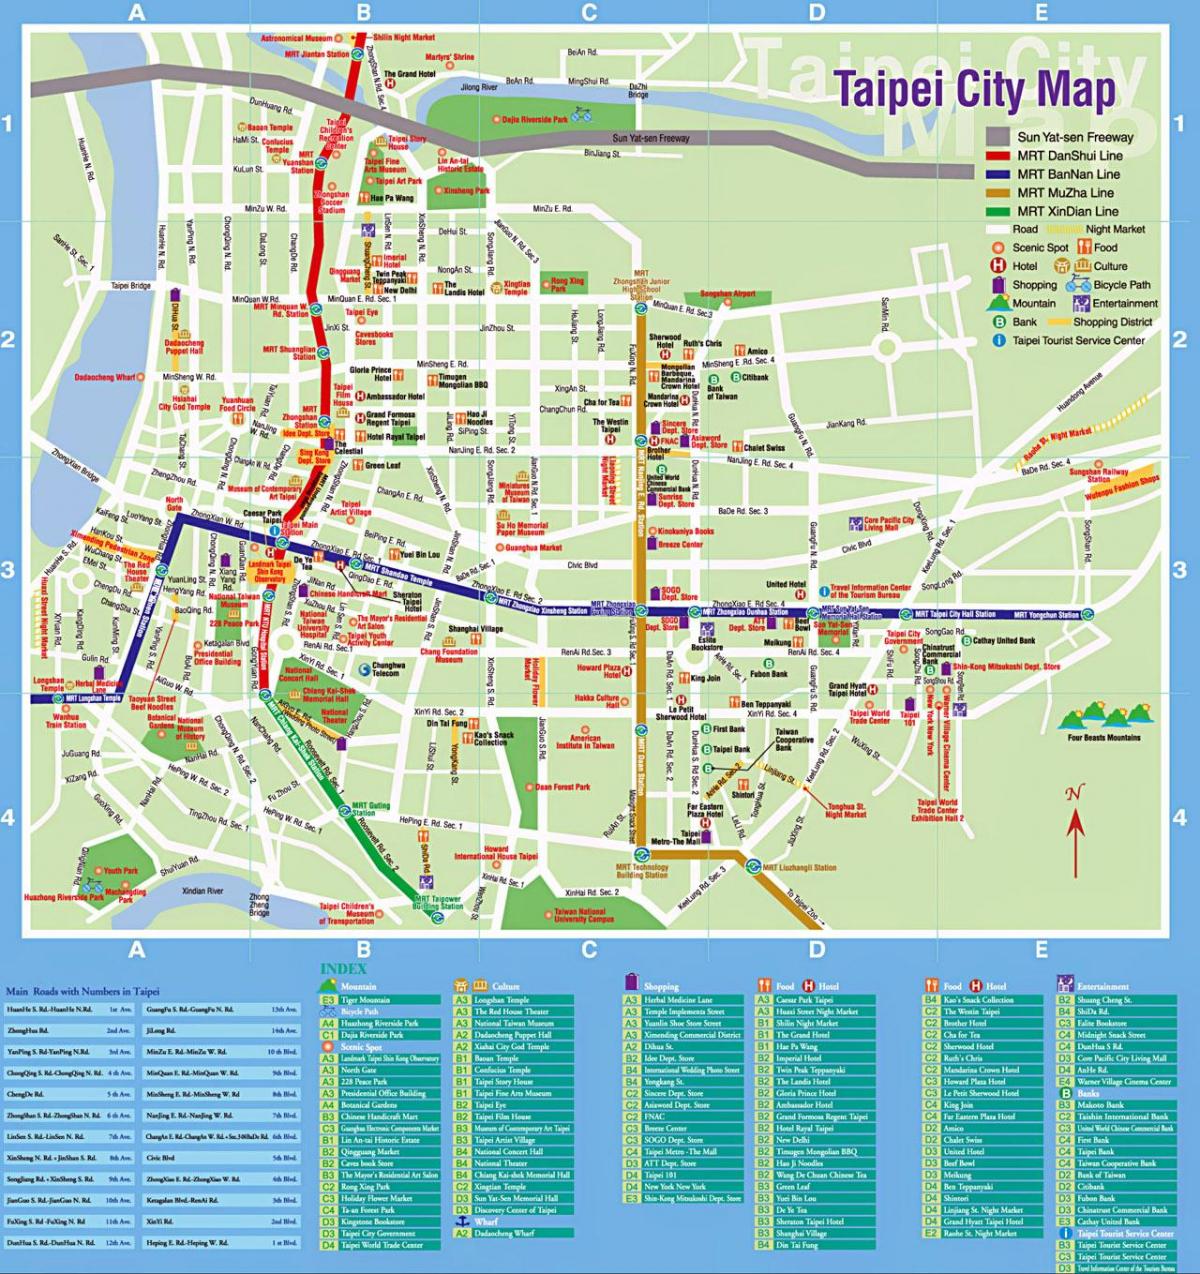 Taipei tourist spots map